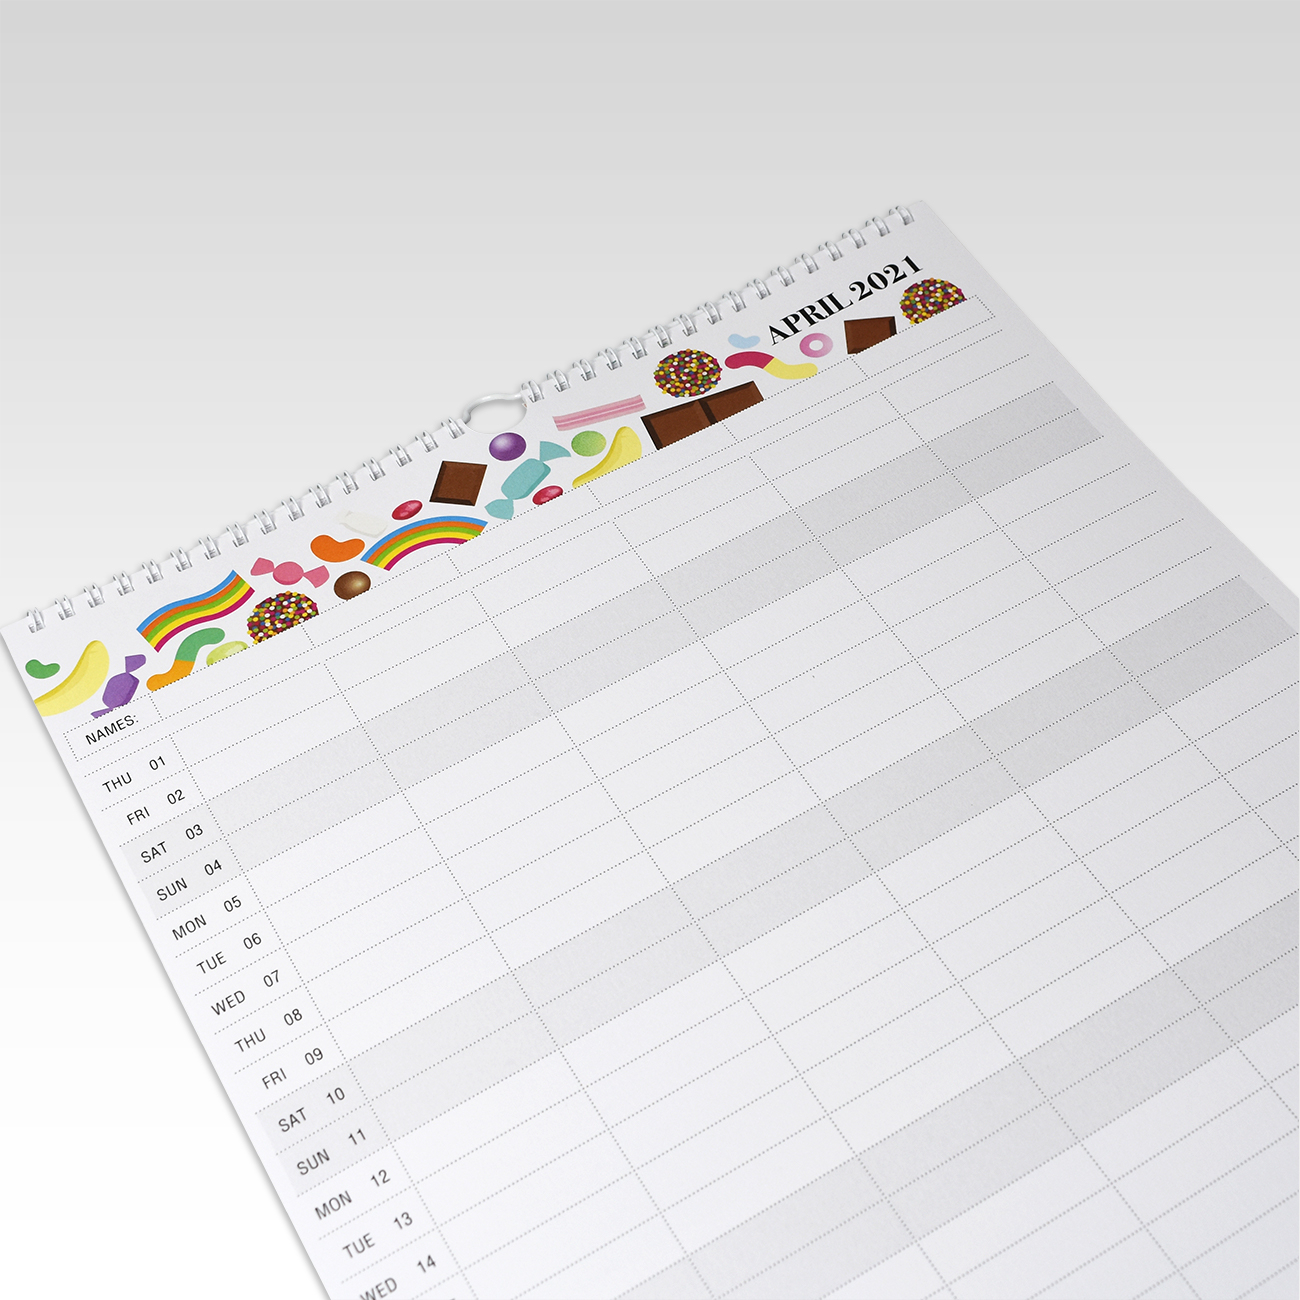 2021 family planner calendar rhicreative